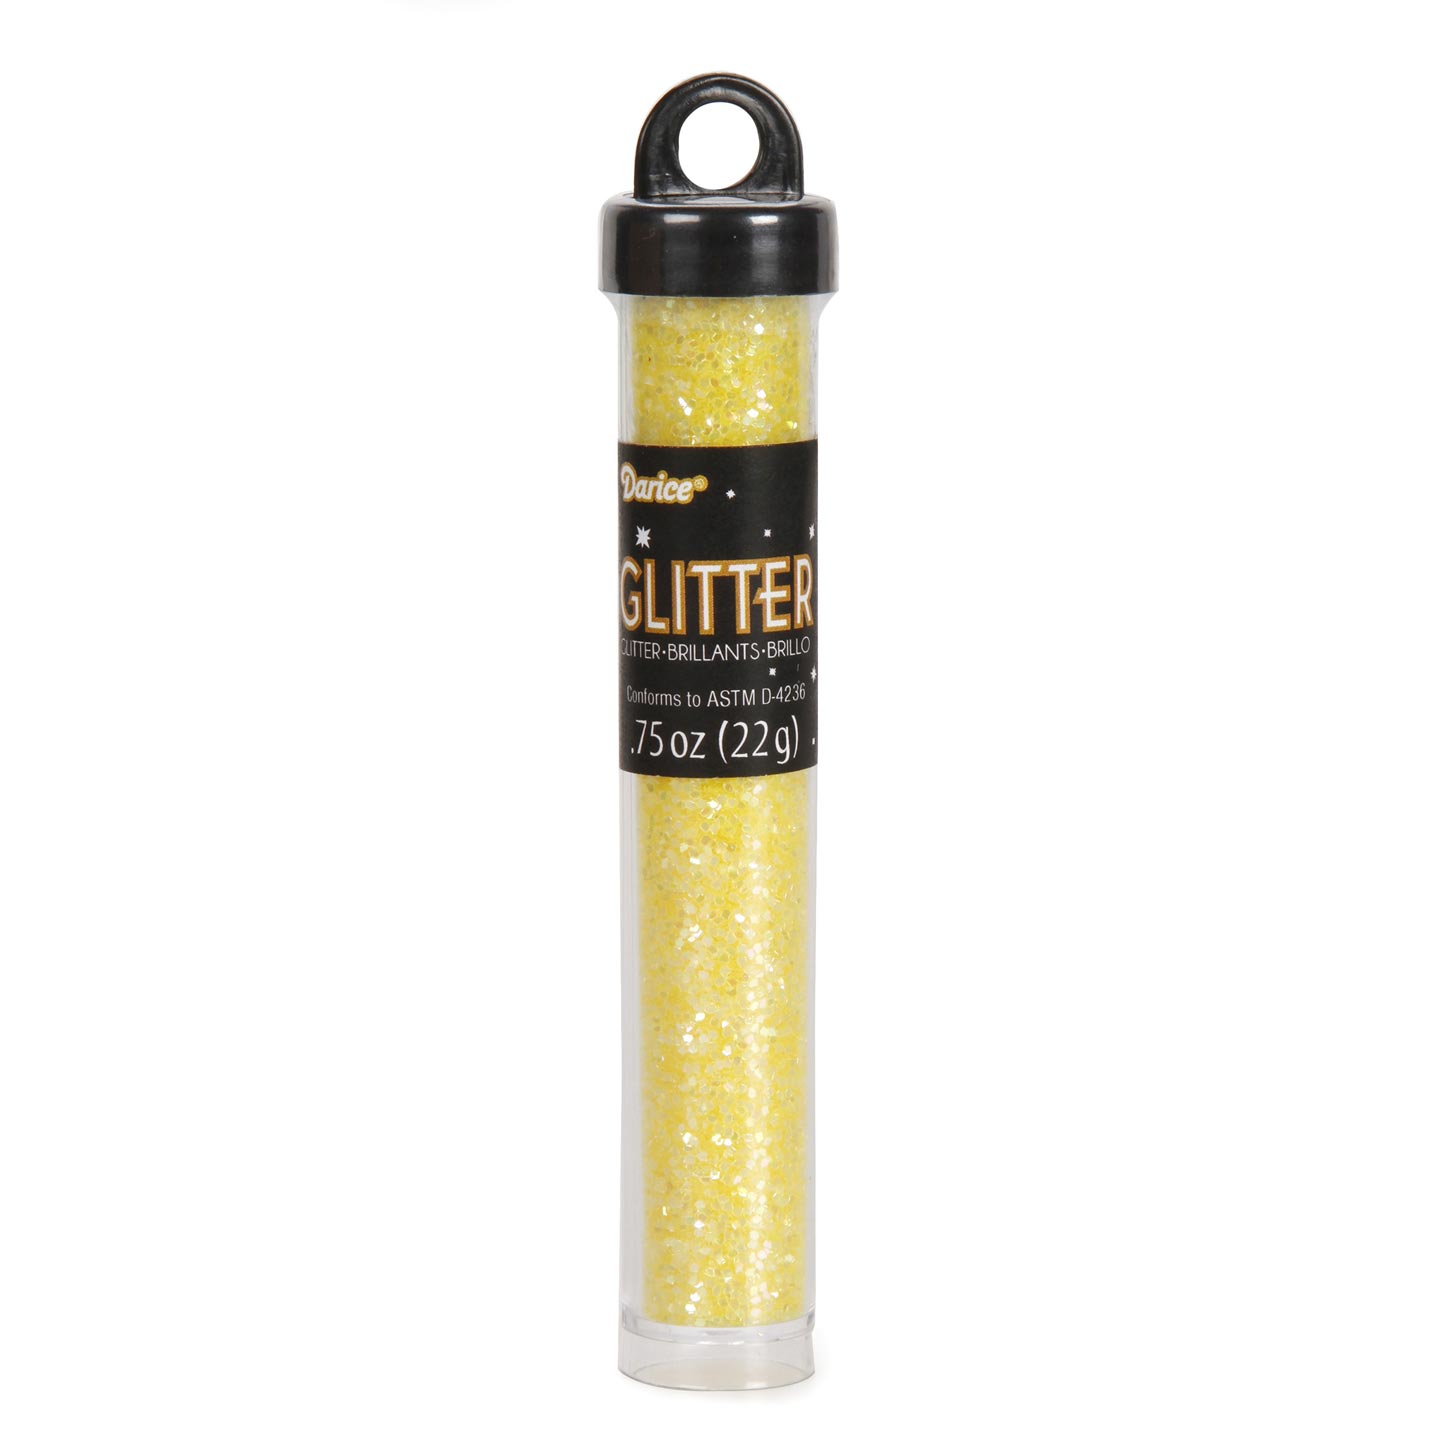 Glitters - Glitter Dust - Sparkle Dust - Diamond Dust - Loose Glitter - Craft Glitter